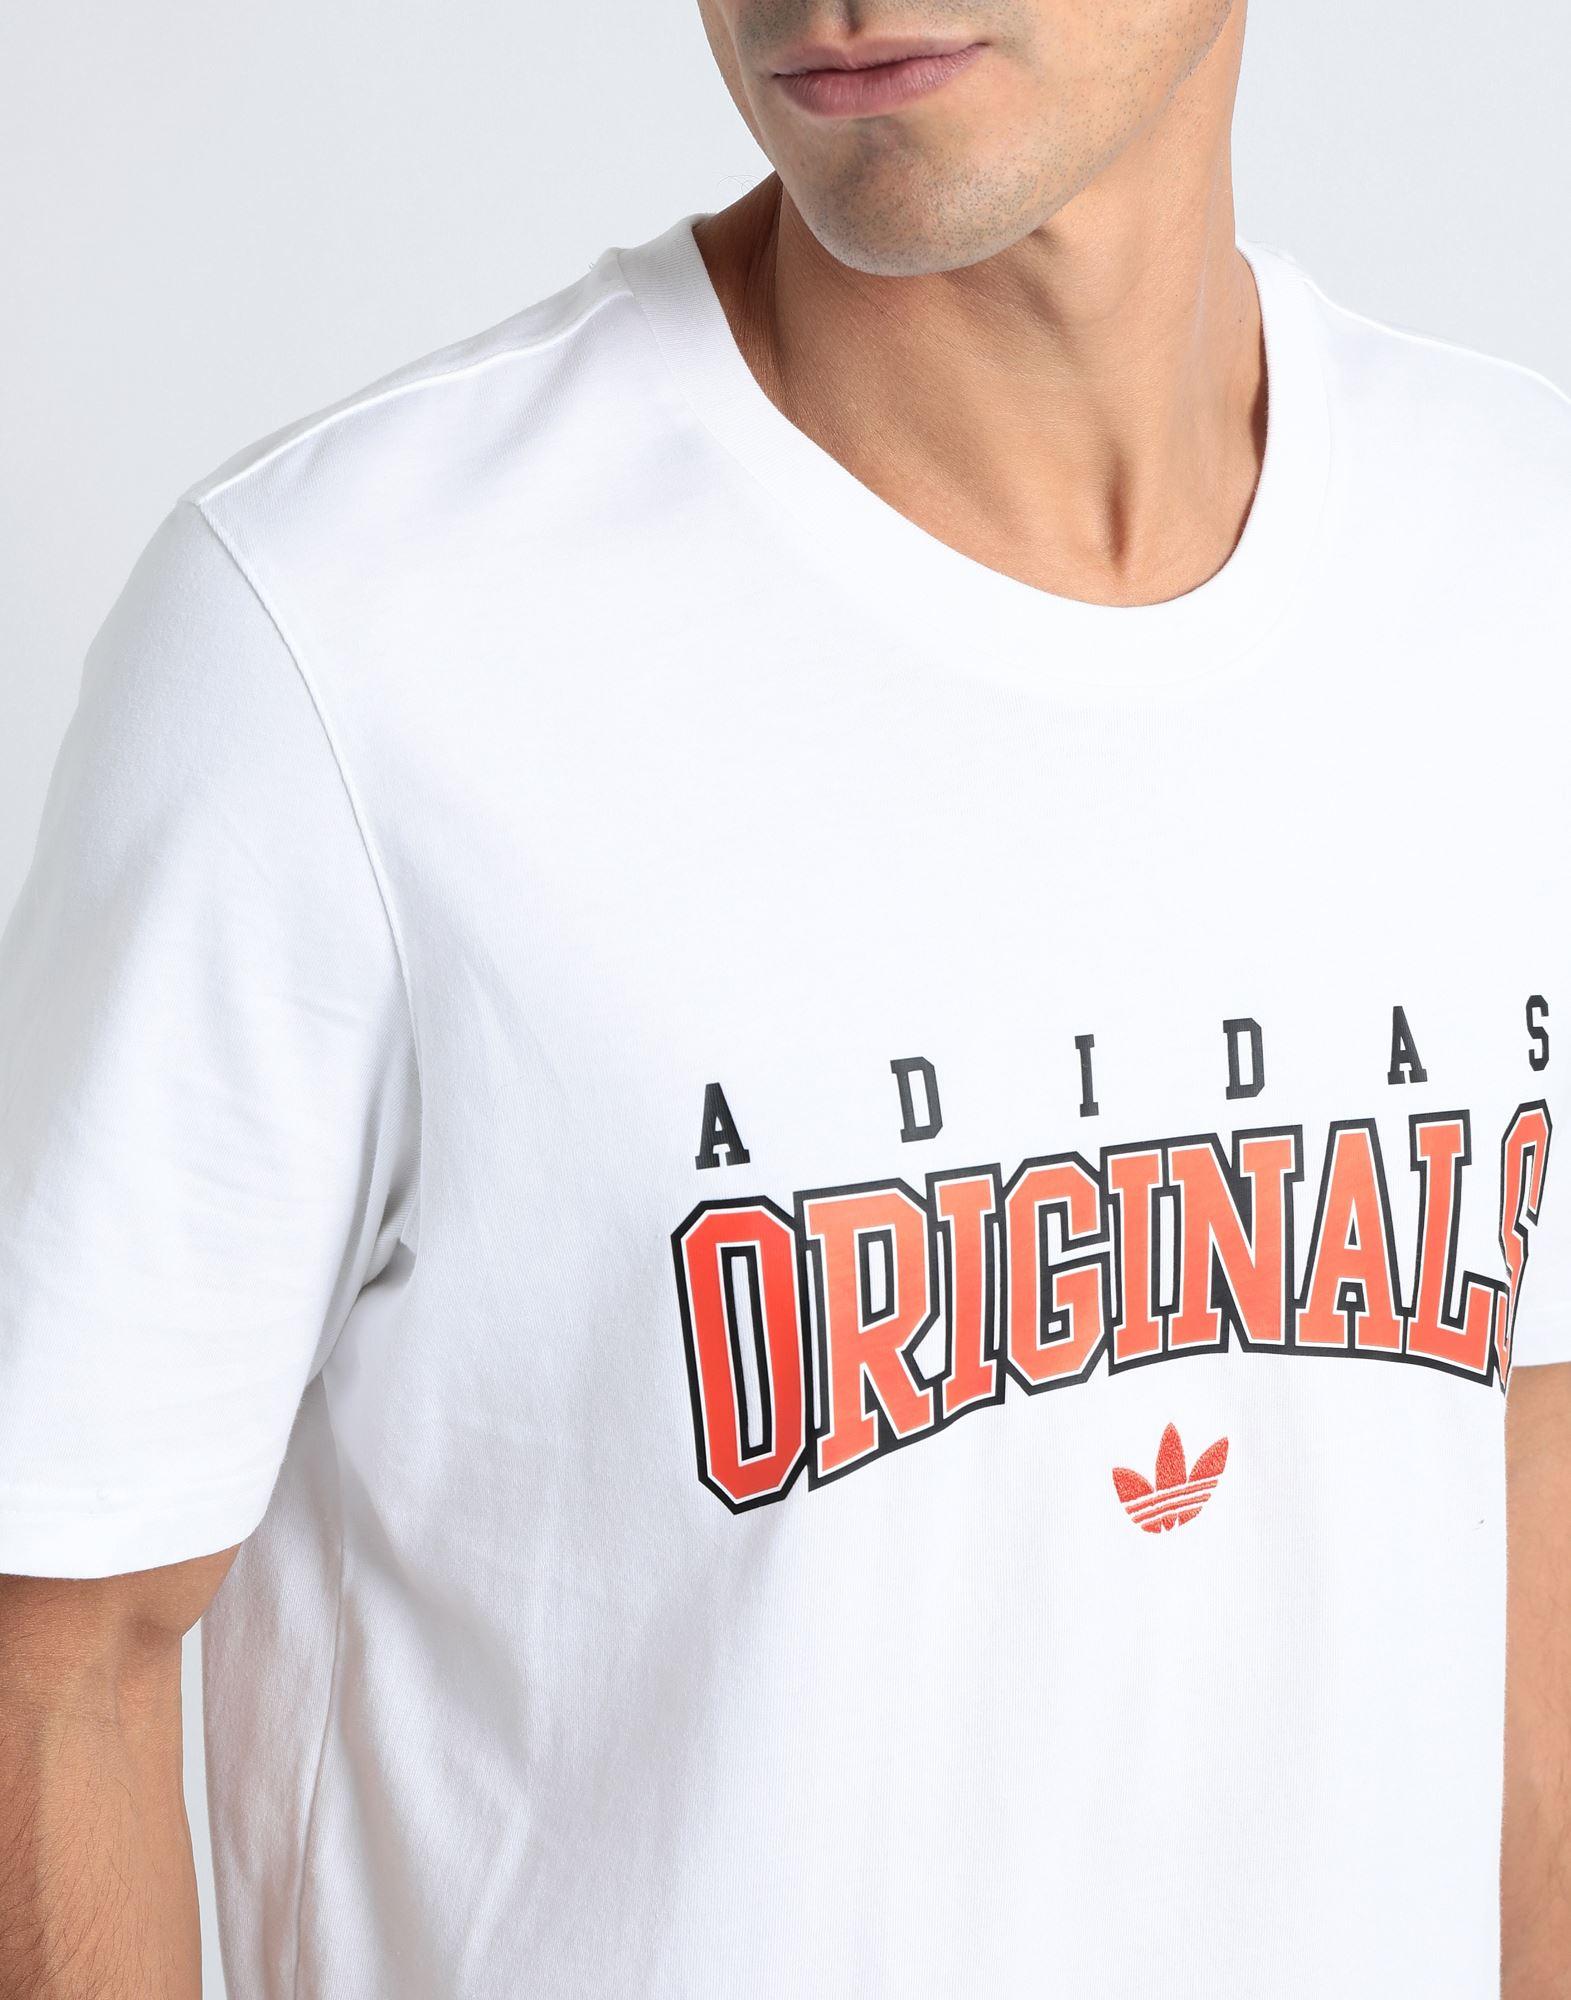 adidas Originals T-shirt in White for Men - Lyst